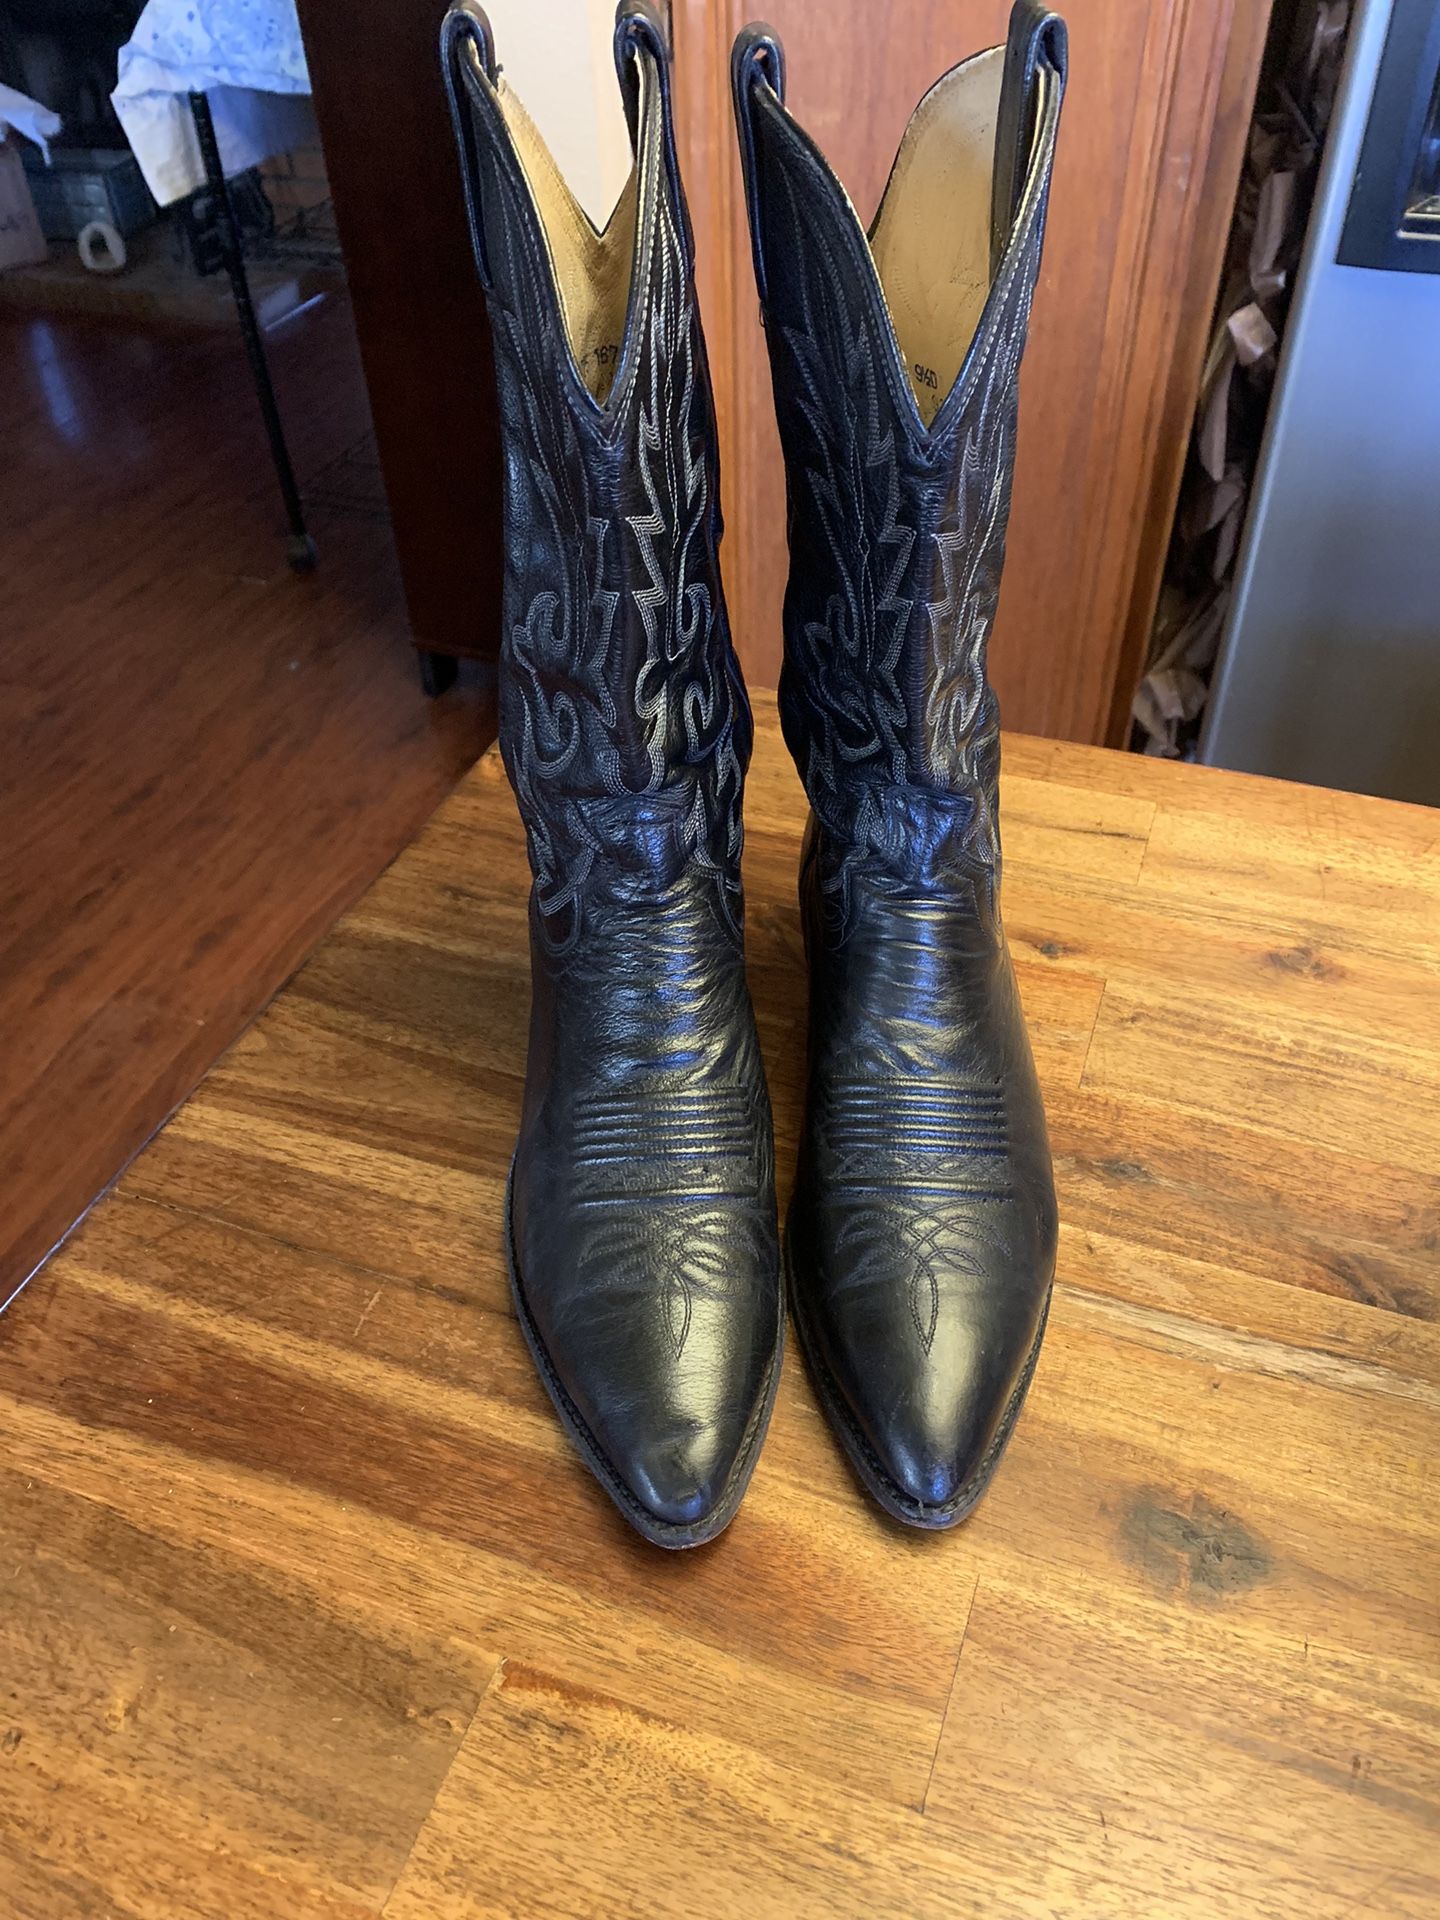 Men’s Dan, Post Leather Cowboy Boots